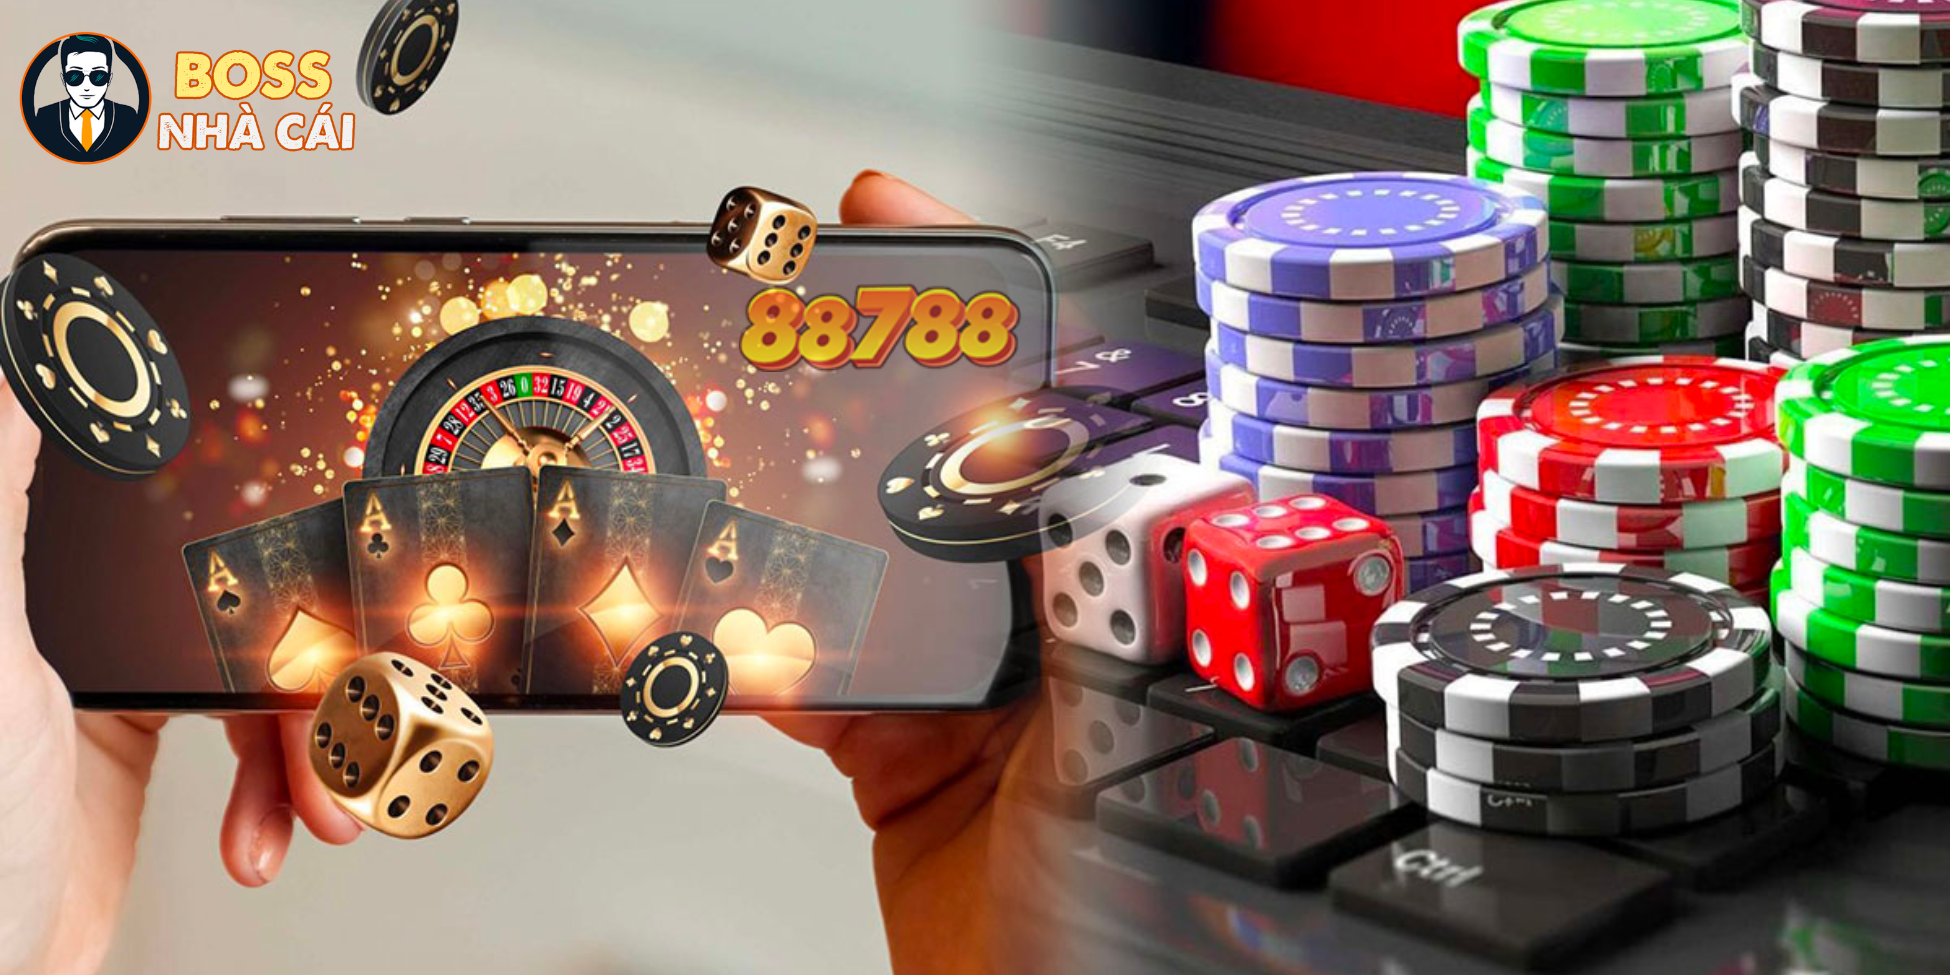 Cá cược casino 88788